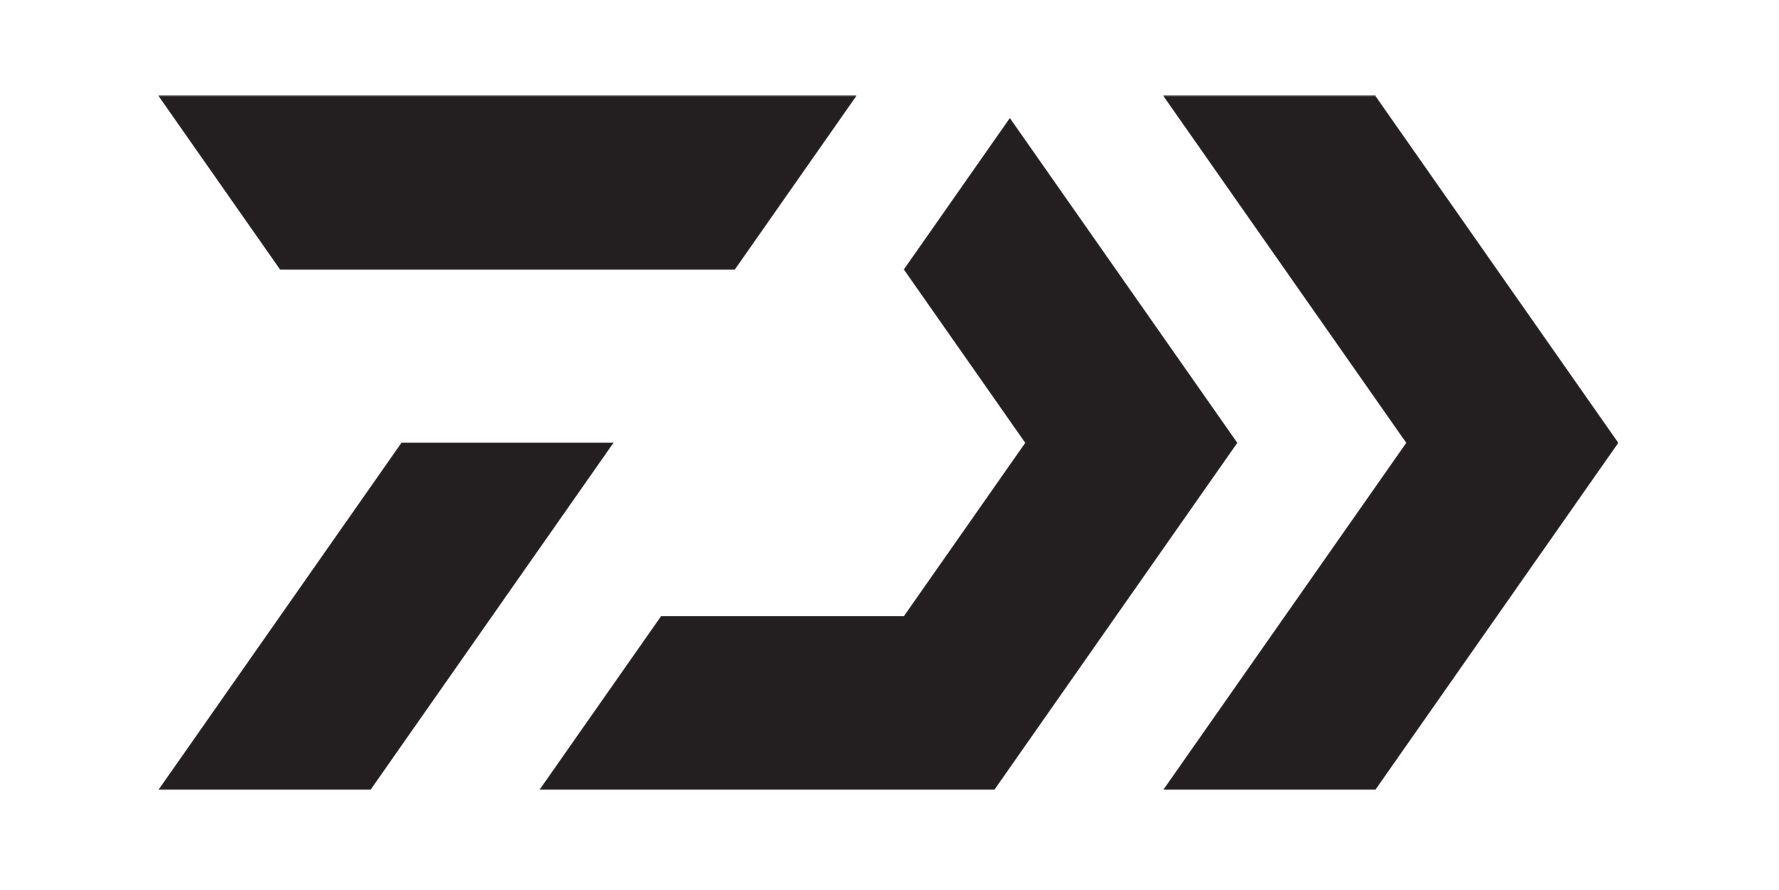 Daiwa Logo - Daiwa - Image Library | Download | Logos